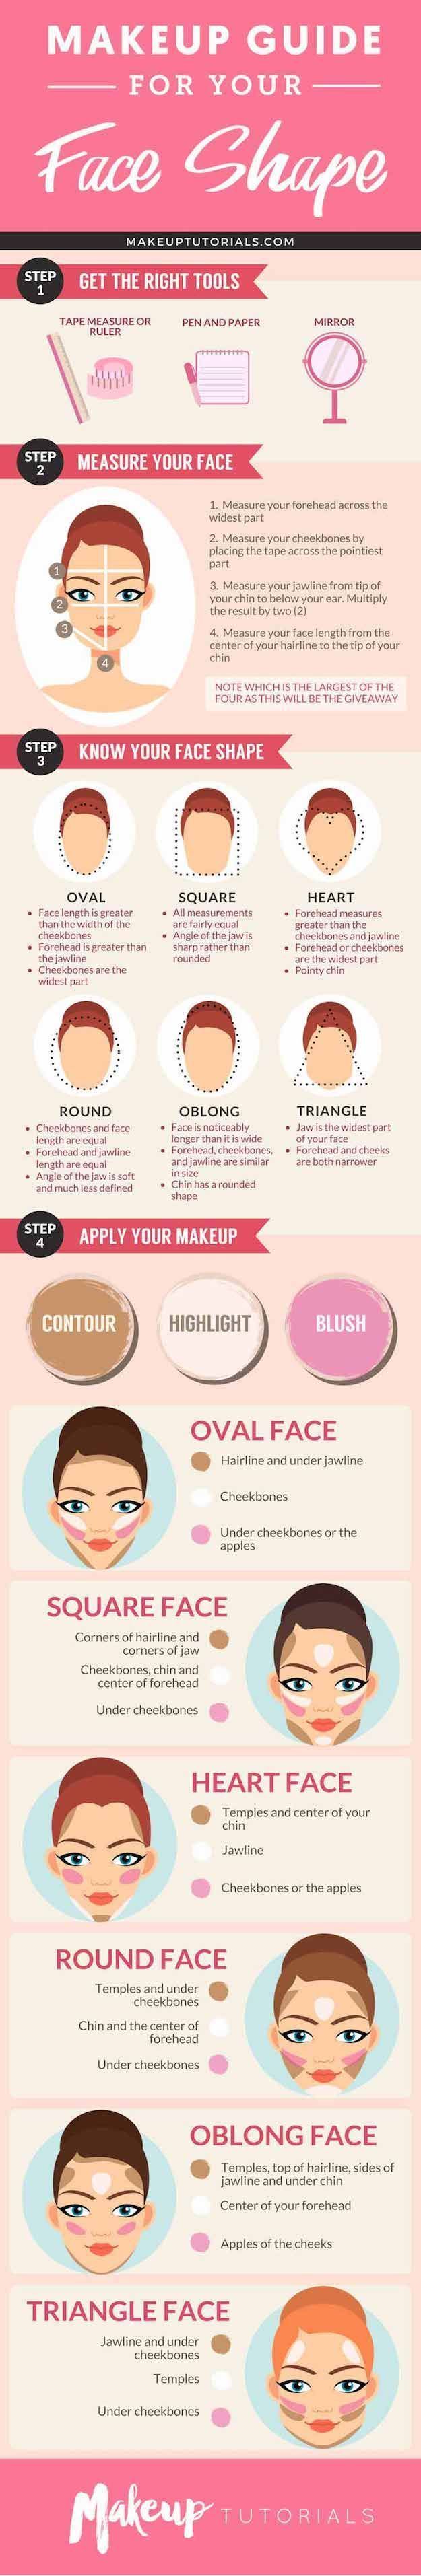 Best Makeup Tutorials And Beauty Tips From The Web | Makeup Tutorials